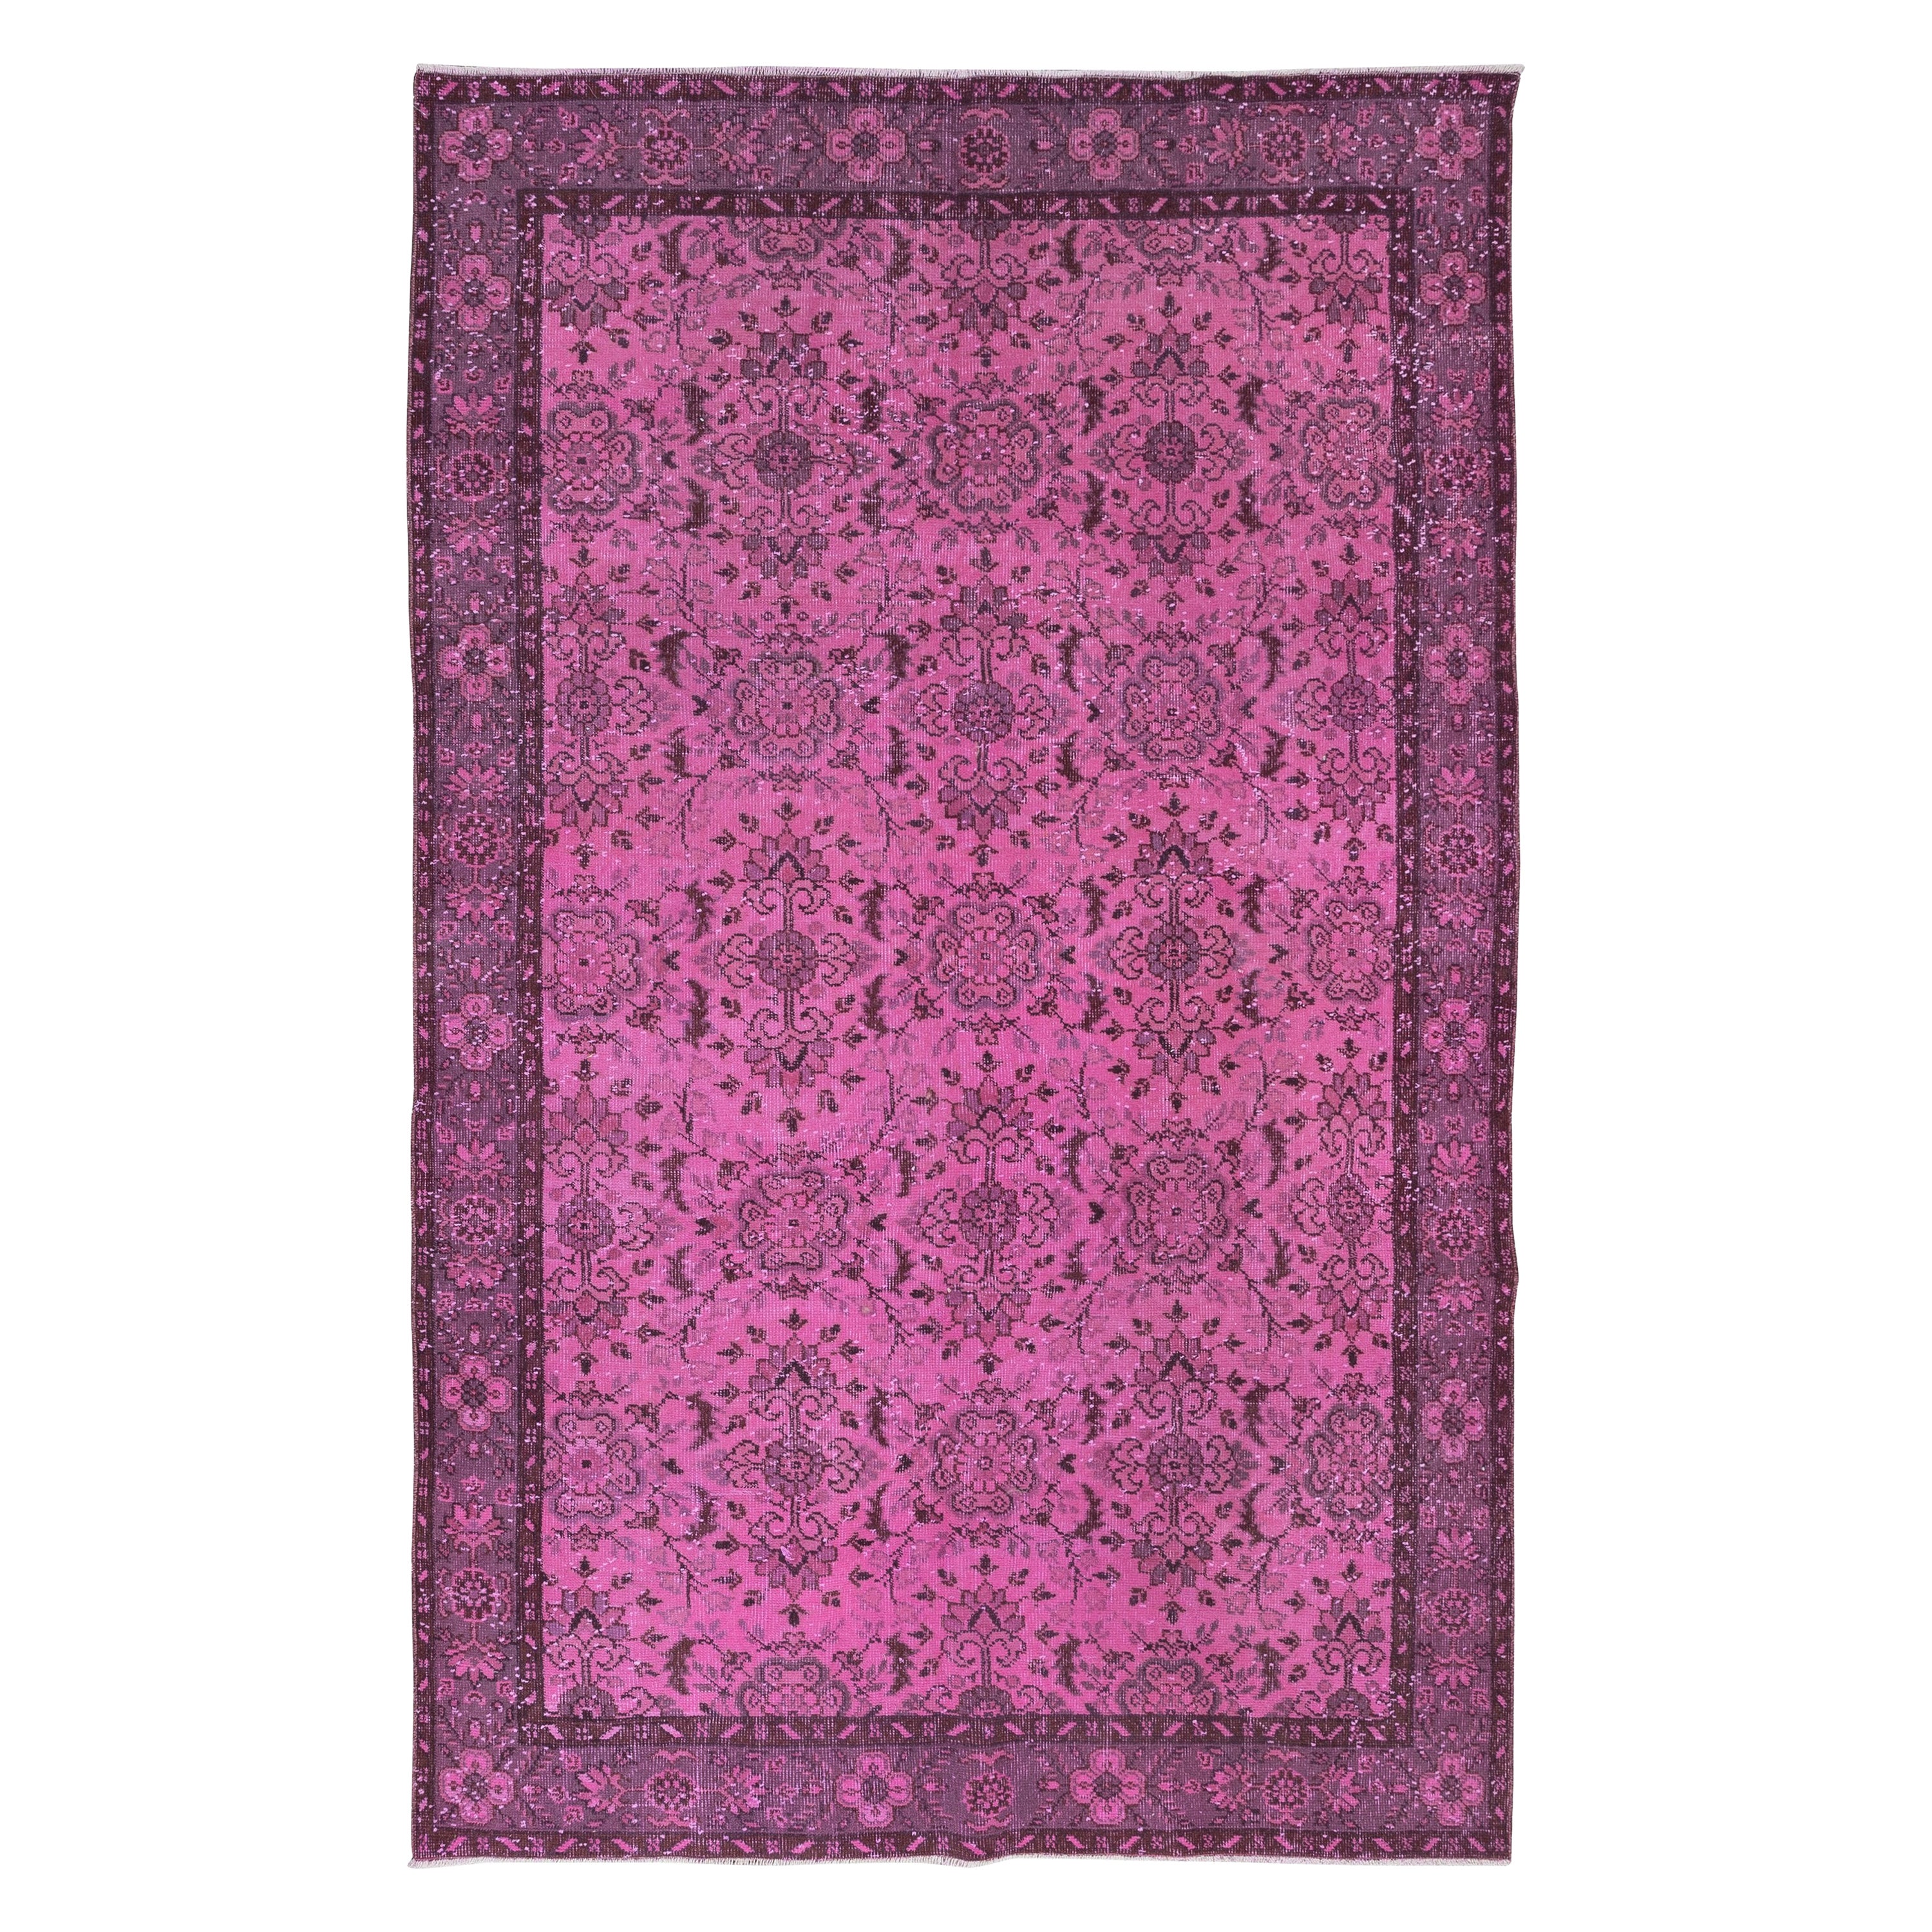 6x9.3 Ft Floral Pattern Handknotted Pink Rug, Modern Turkish Overdyed Carpet (Tapis turc surteint moderne)